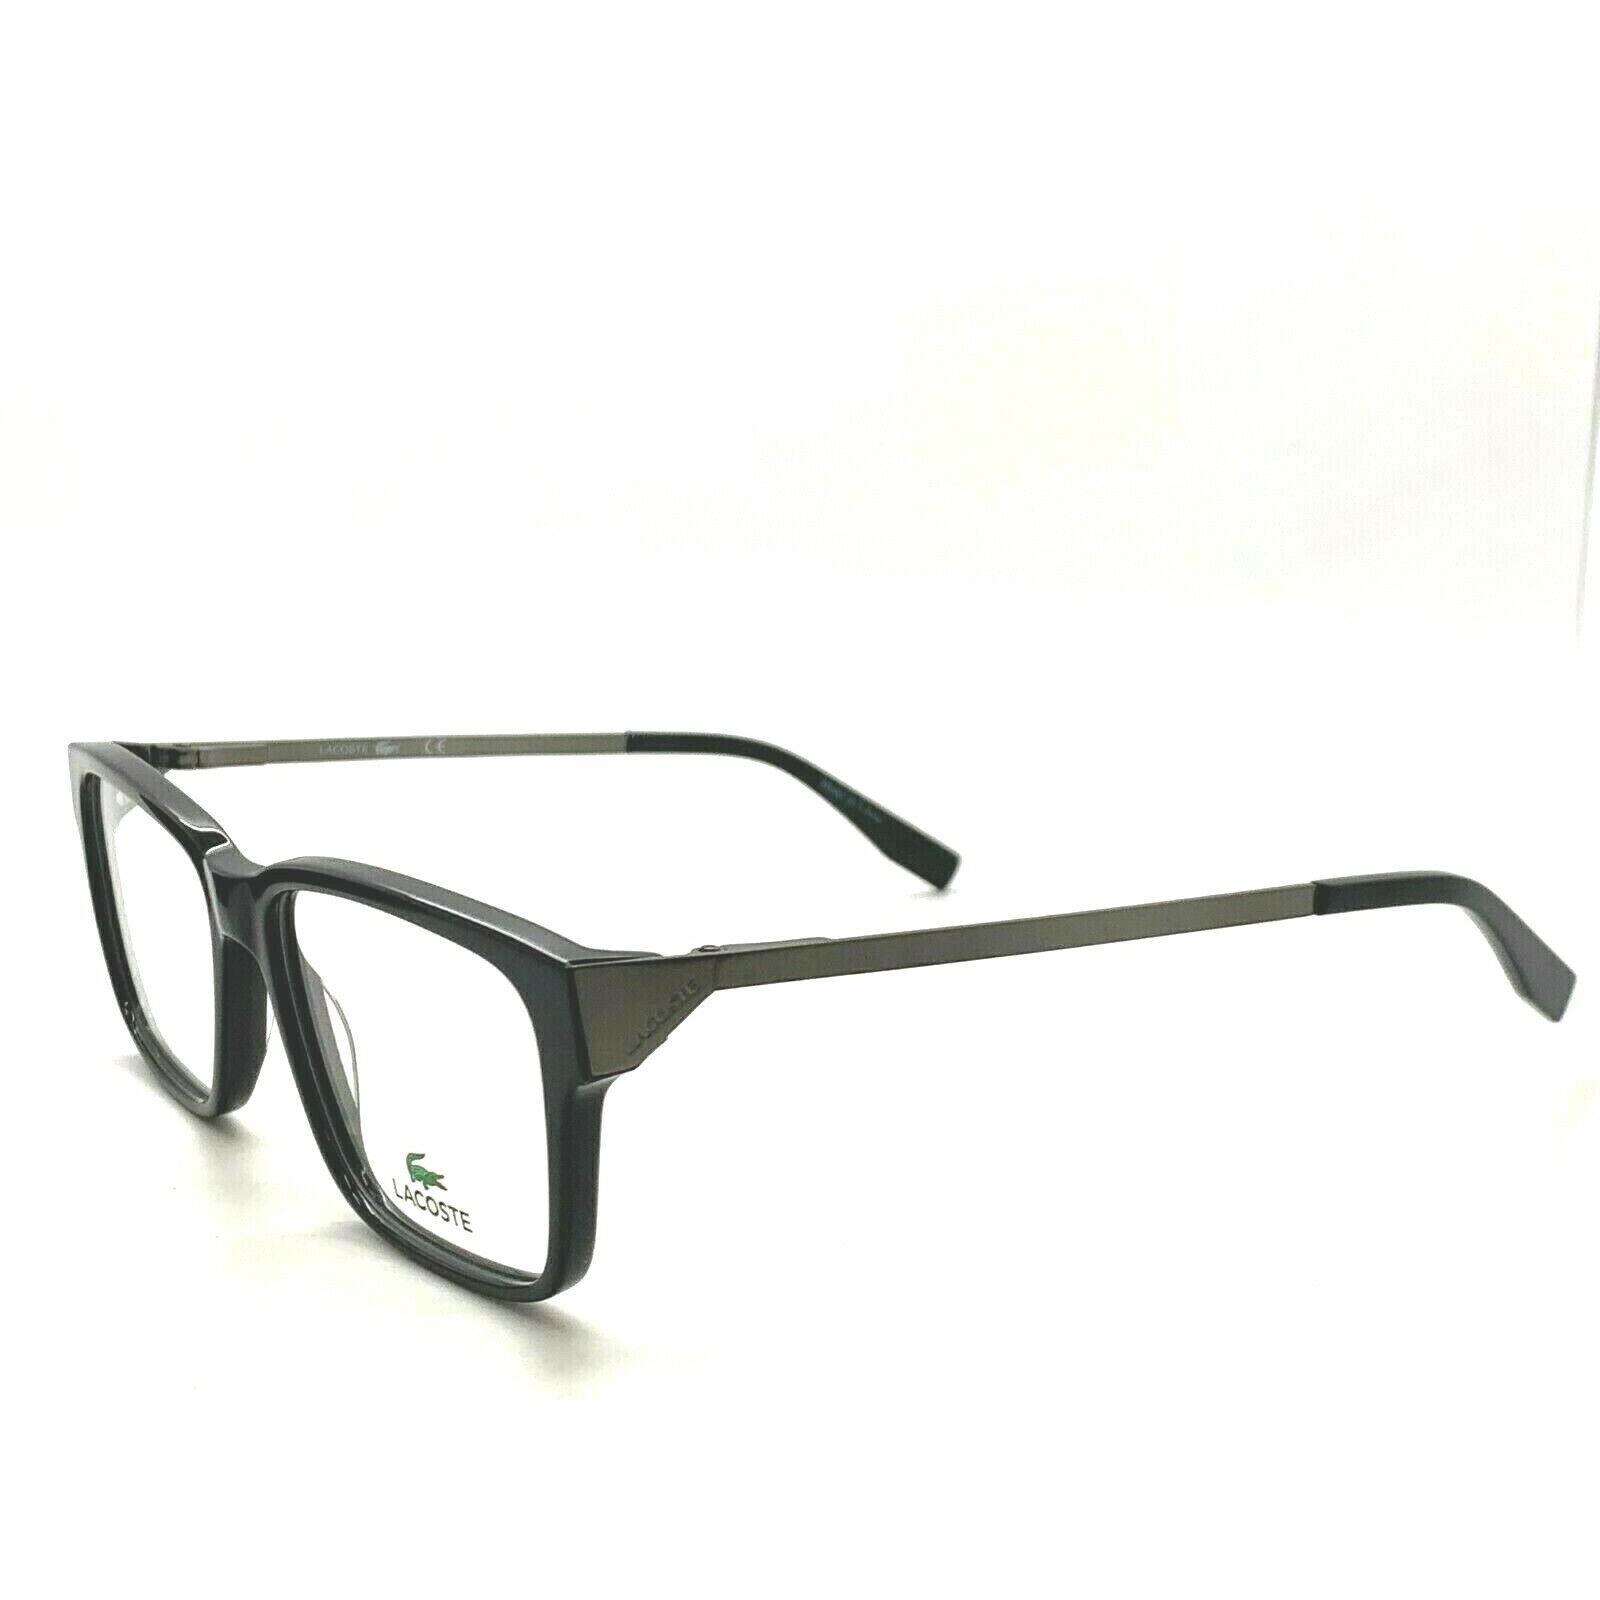 Lacoste eyeglasses  - Black Frame